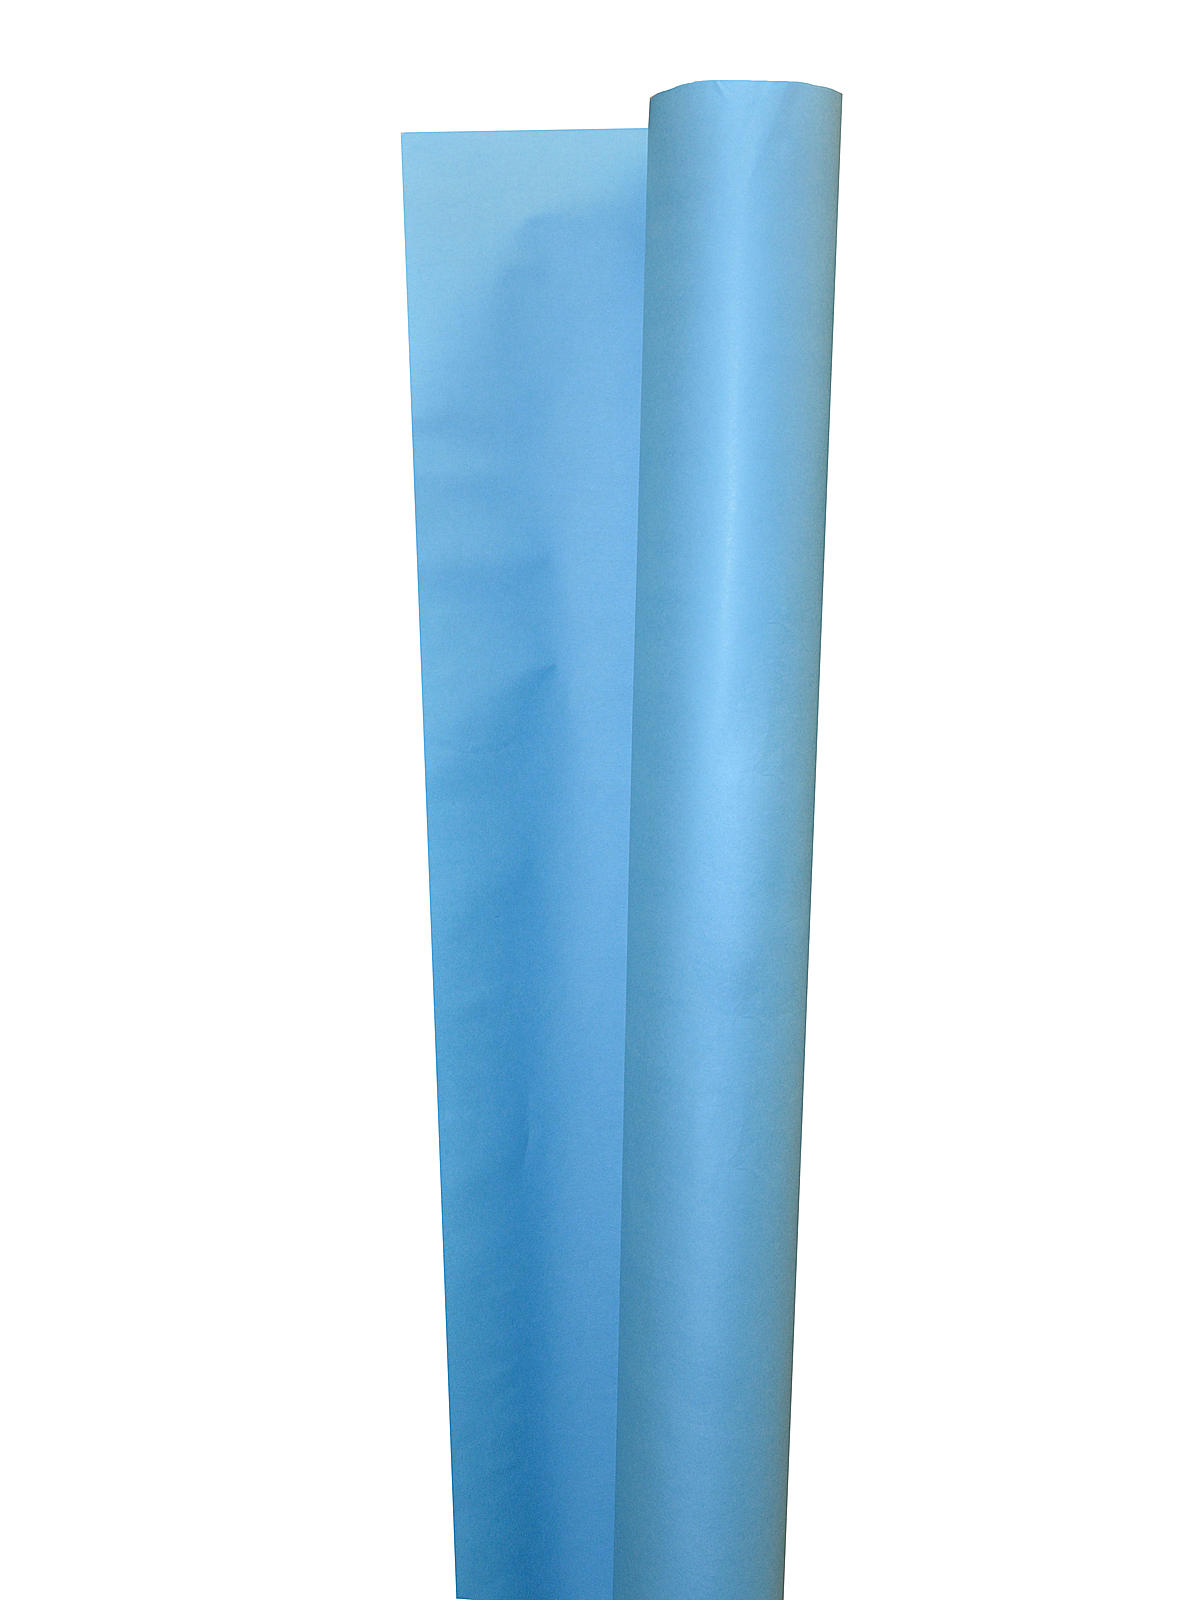 Bemiss Jason Spectra Art Kraft Paper Roll Light Blue 48 In. X 200 Ft.